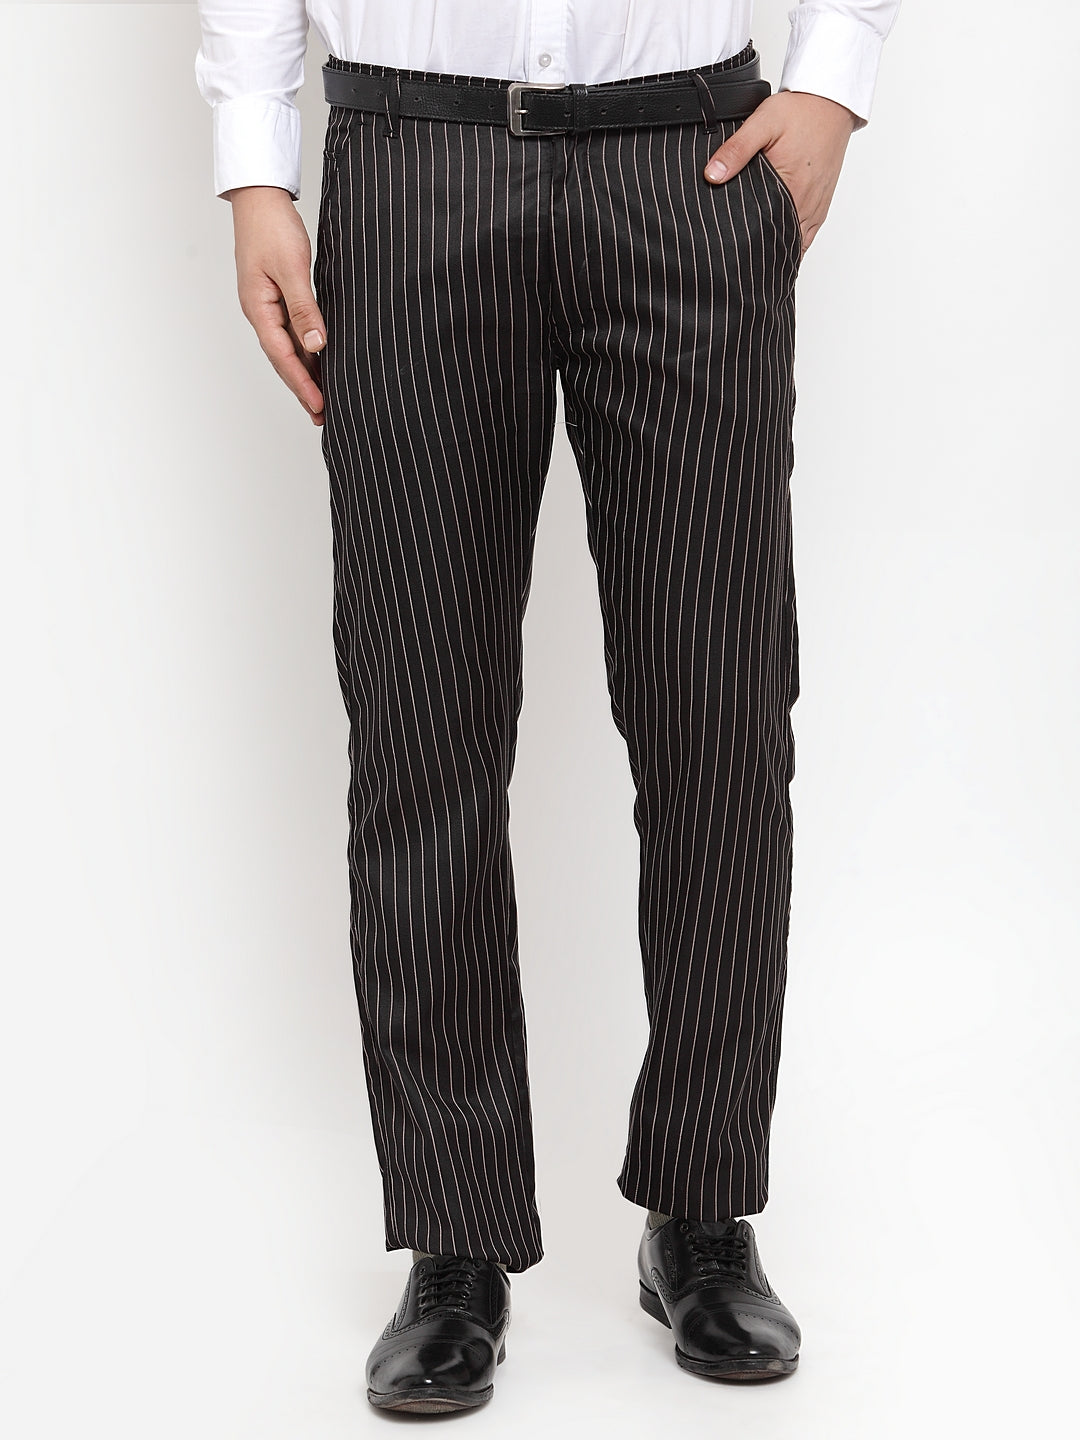 Jainish Men's Black Cotton Striped Formal Trousers